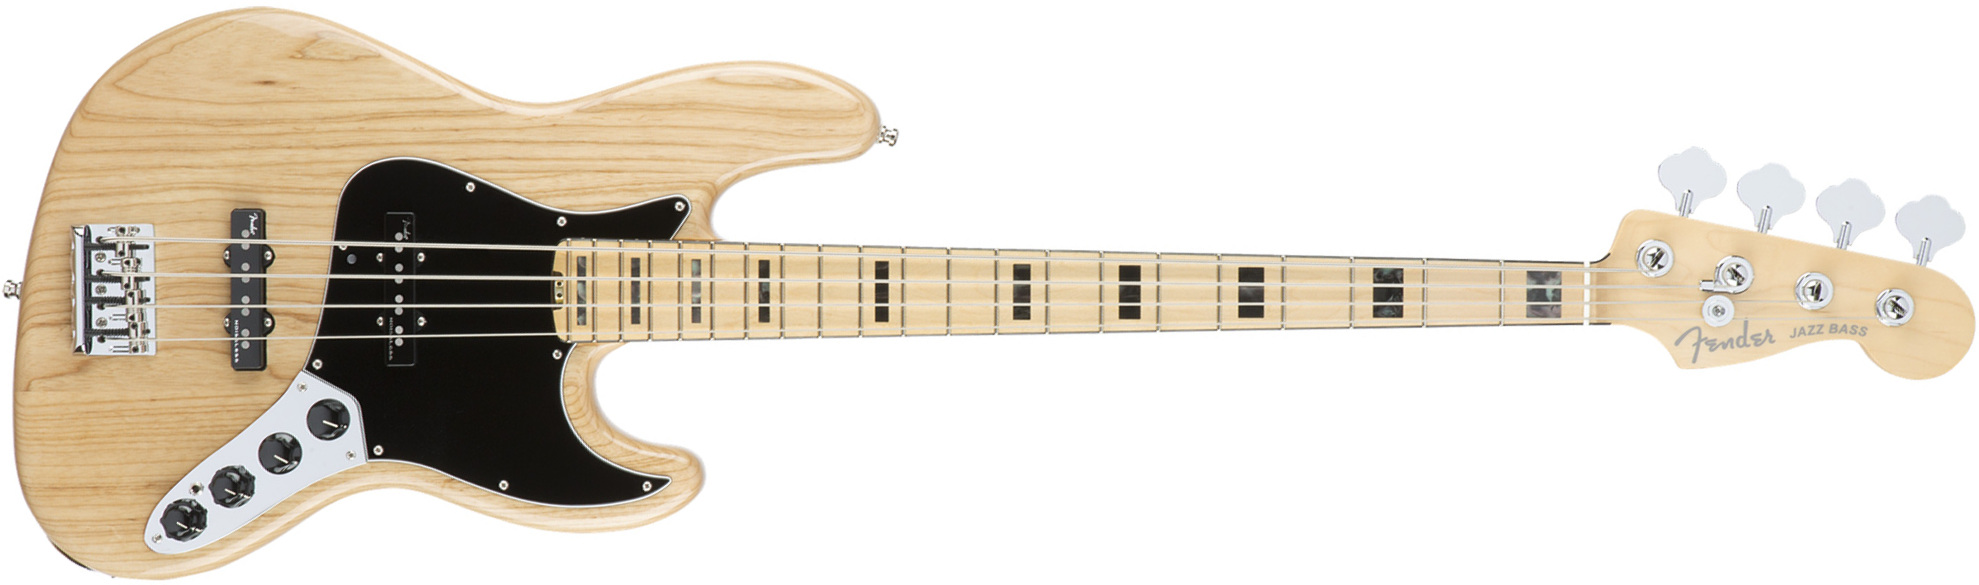 Fender Jazz Bass American Elite Ash 2016 (usa, Mn) - Natural - Solid body elektrische bas - Main picture